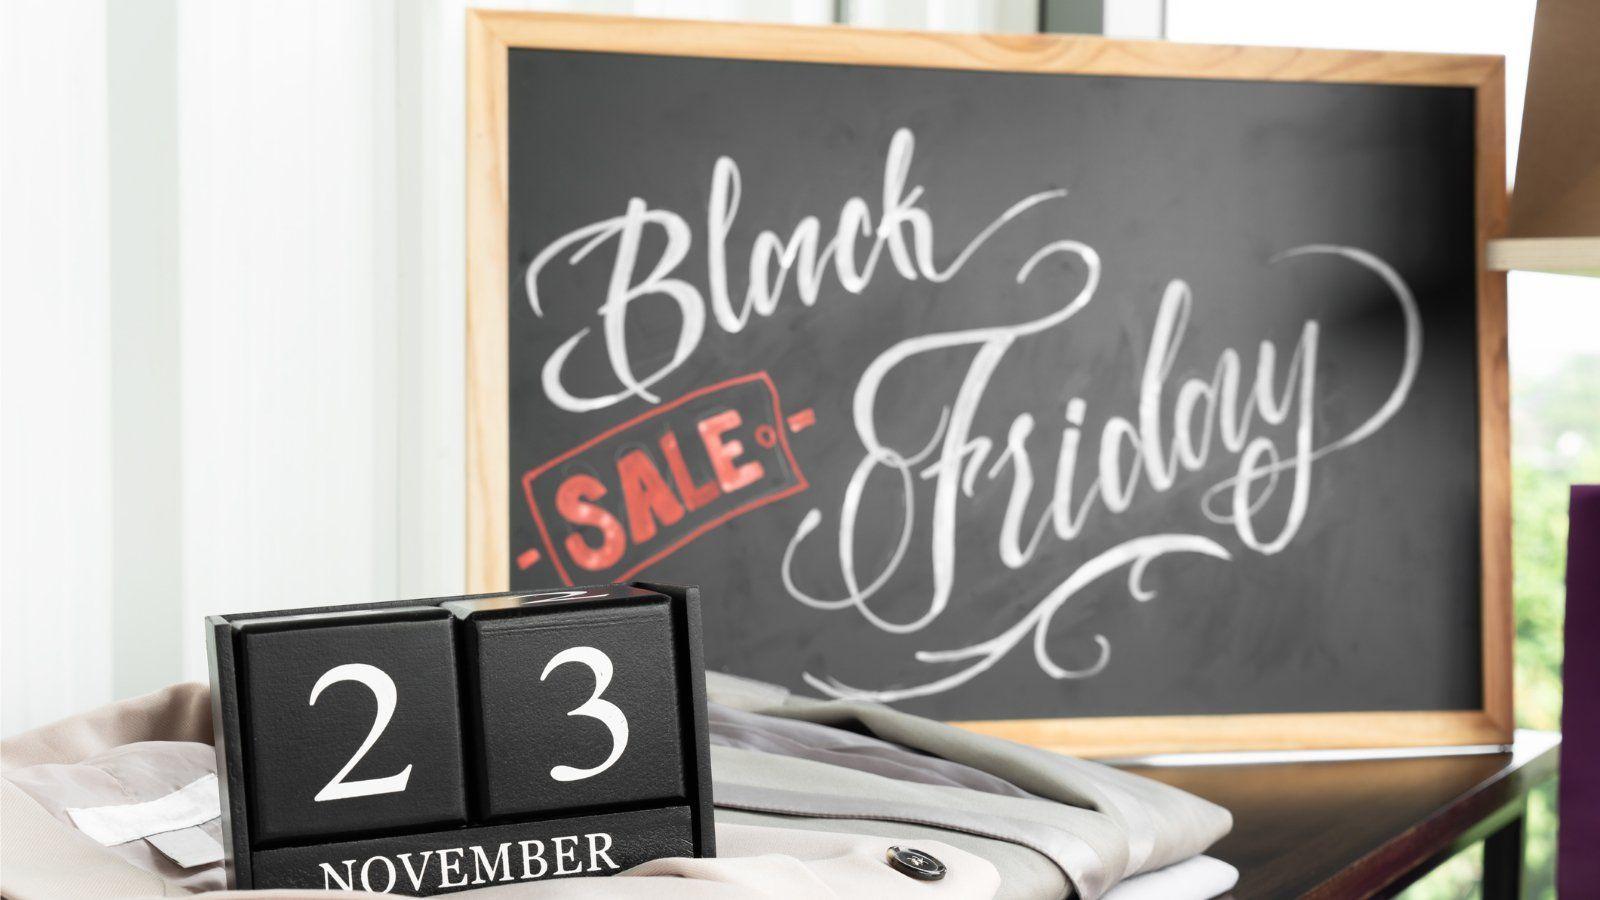 Black Friday Deals For IT Professionals